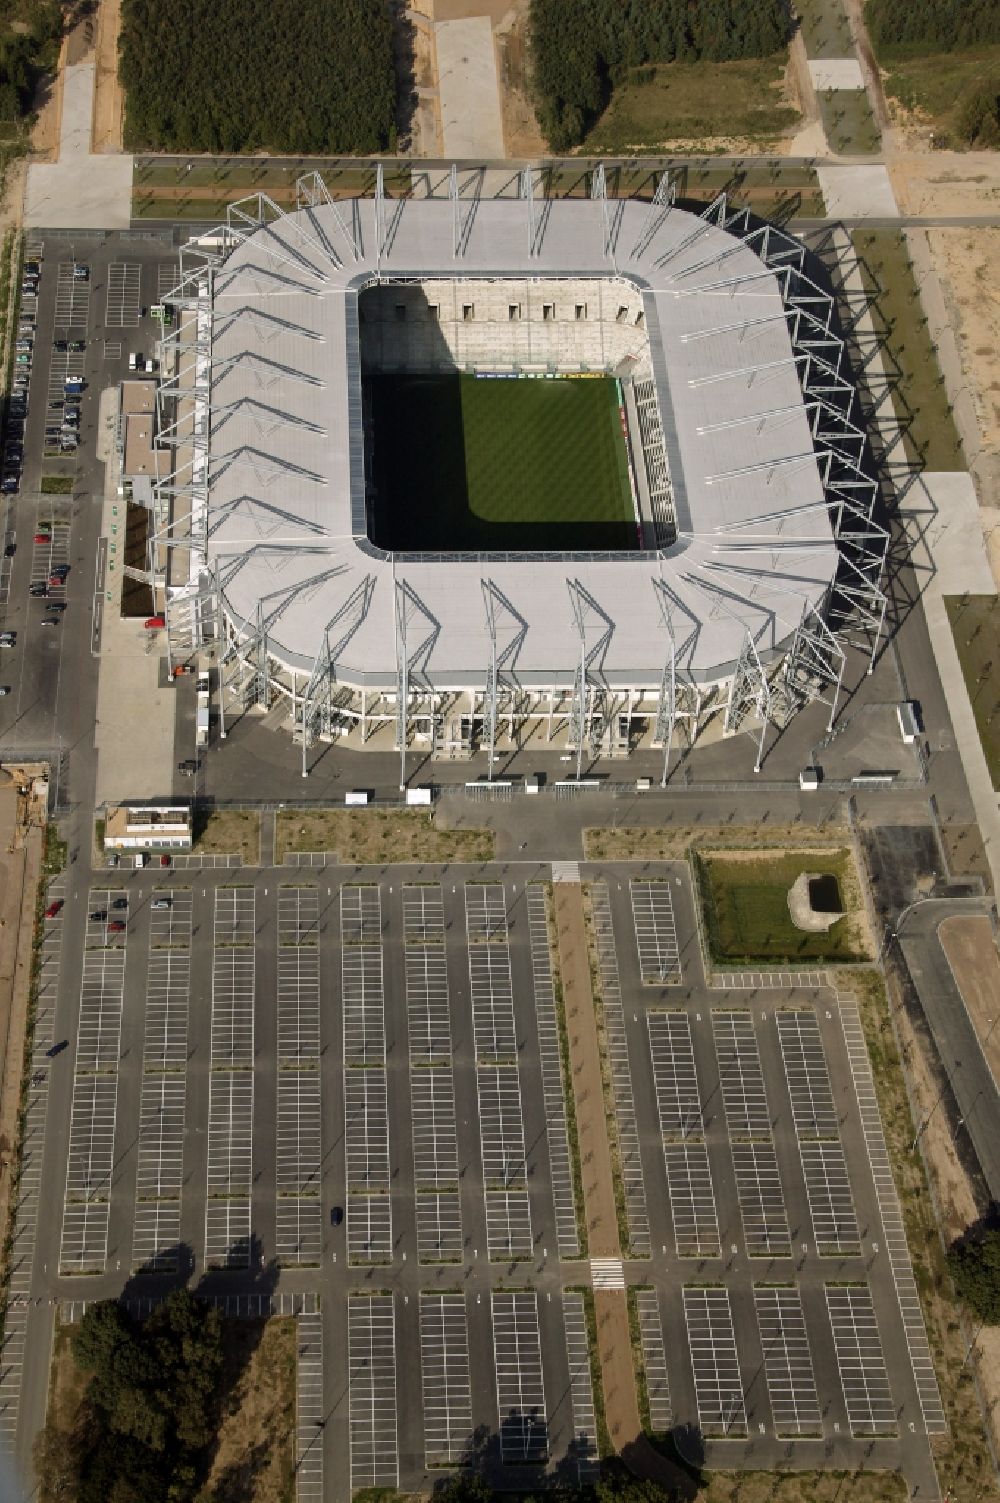 Mönchengladbach from above - View of the Borussia-Park Stadium. It is the home stadium of the football team Borussia Monchengladbach